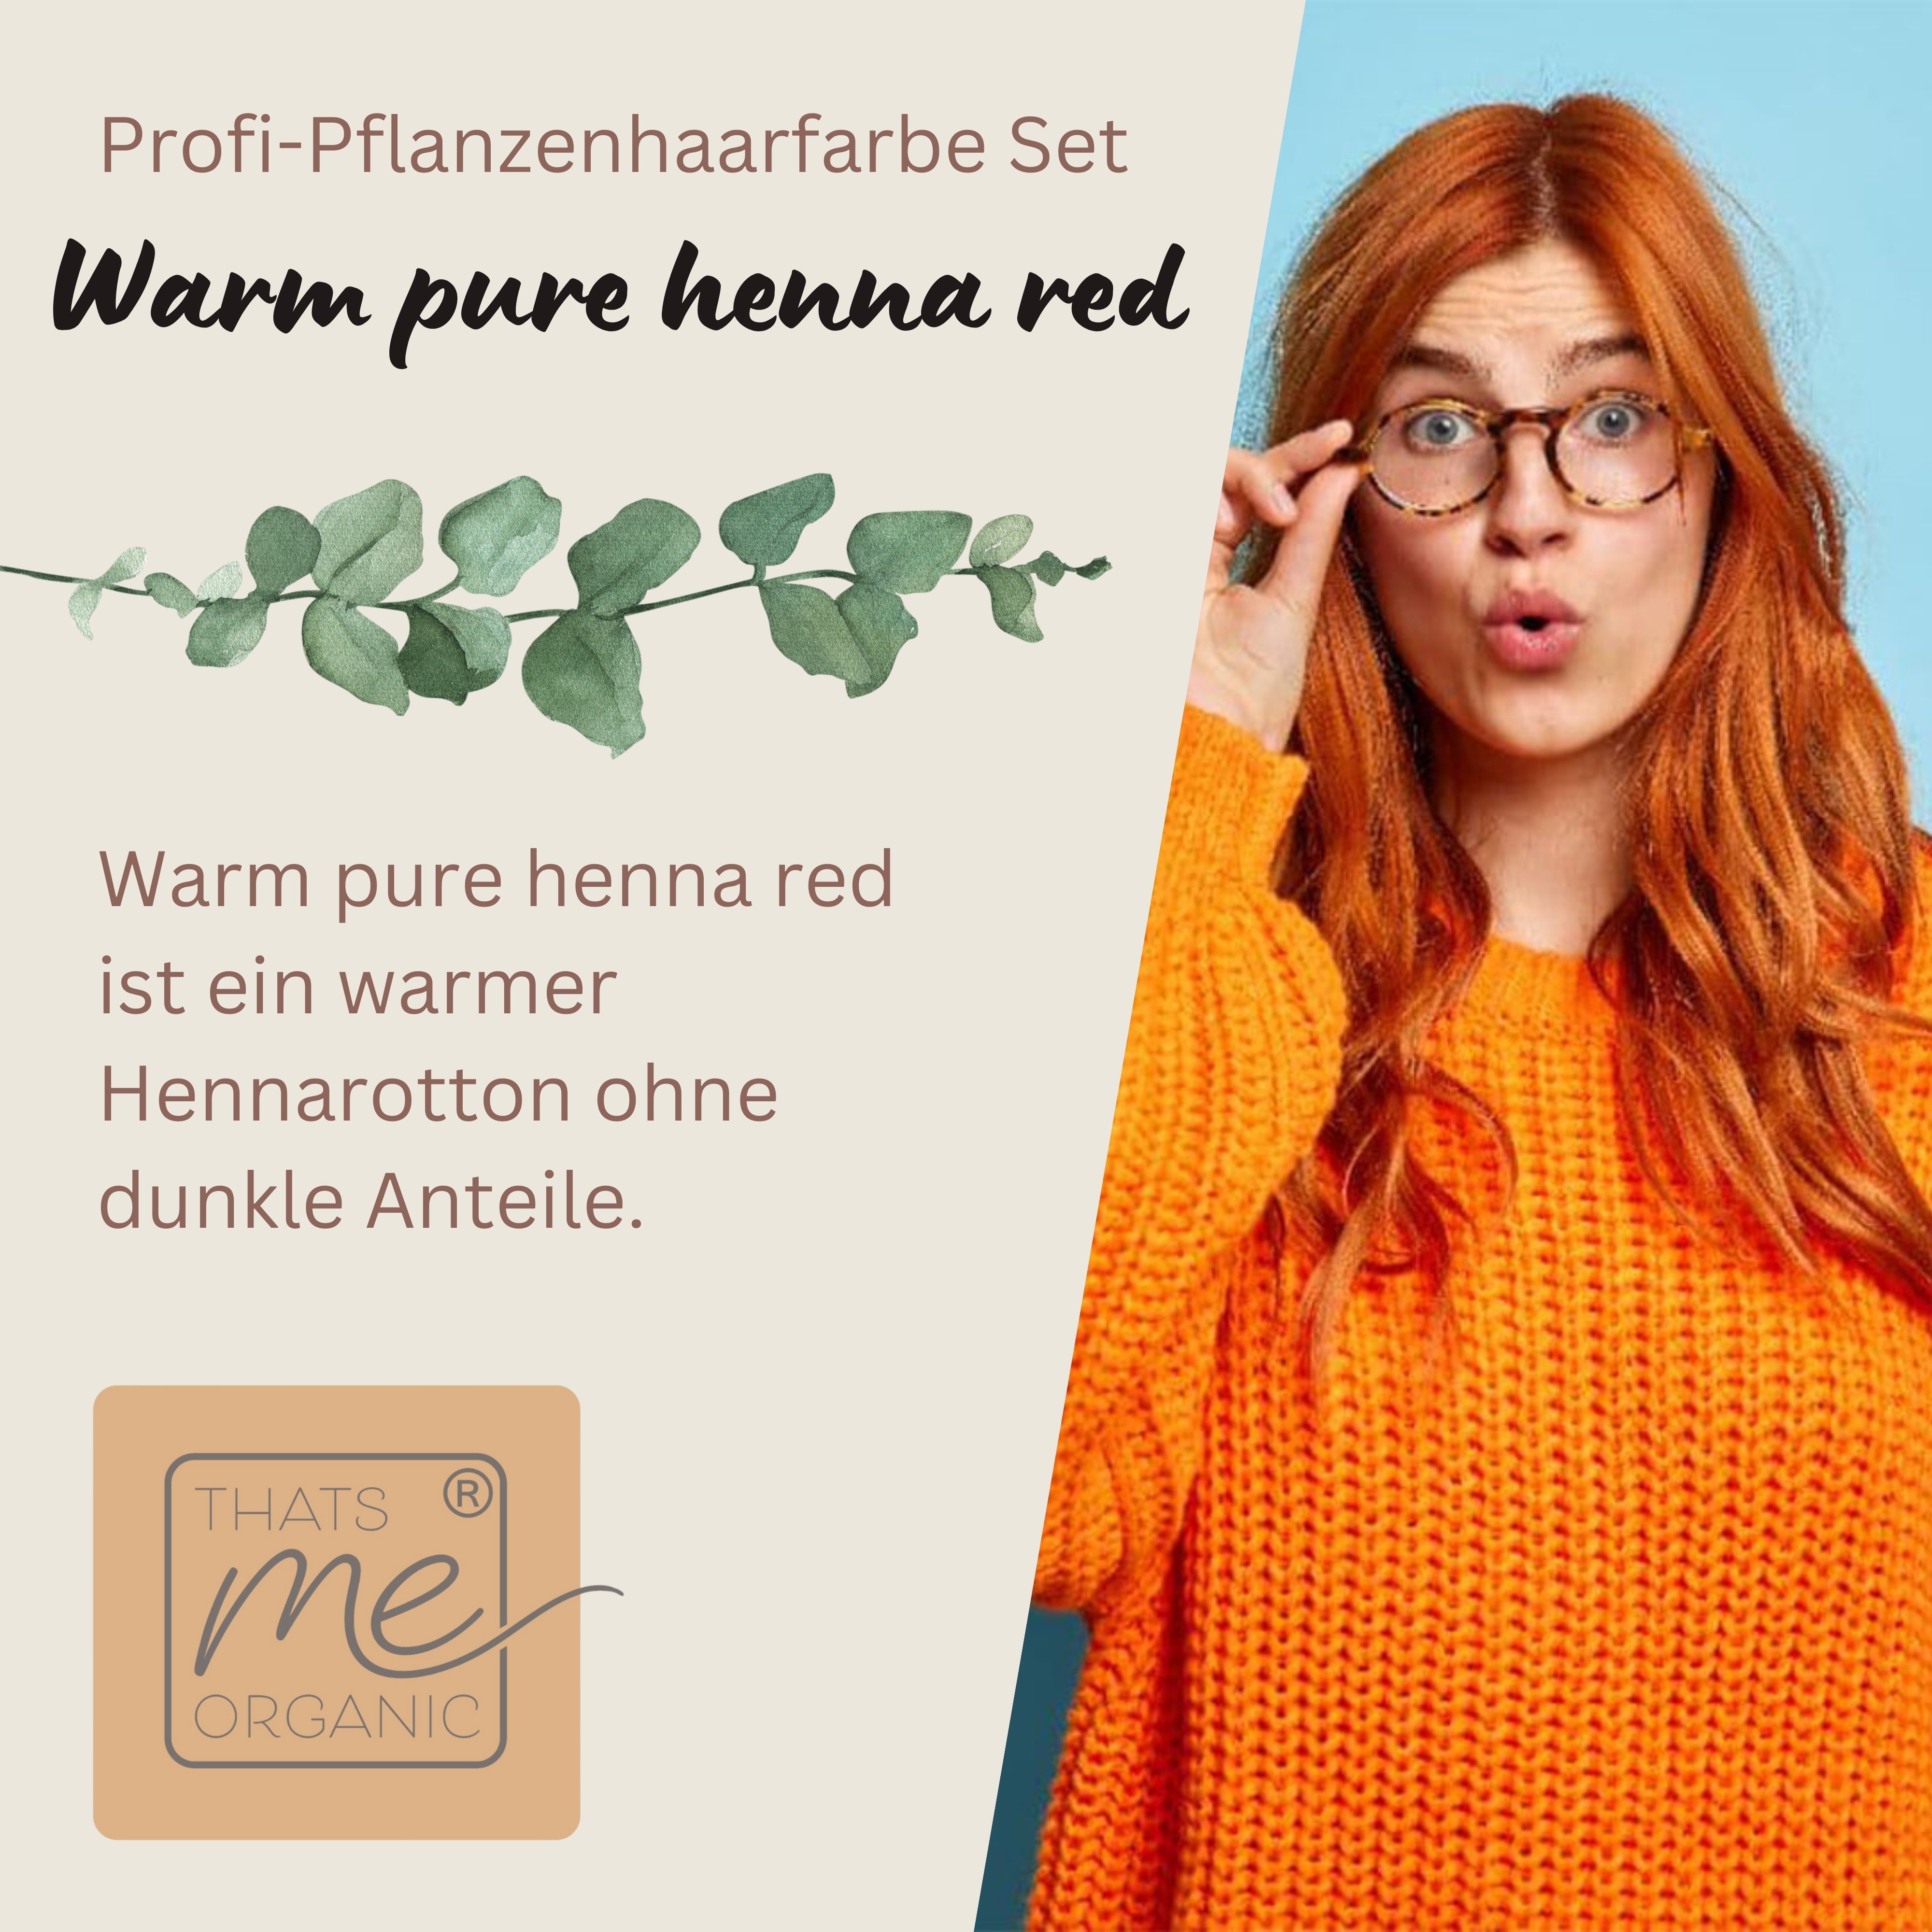 Profi-Pflanzenhaarfarbe "warmes rotes Henna pur - warm pure henna red"  90g Nachfüllpack